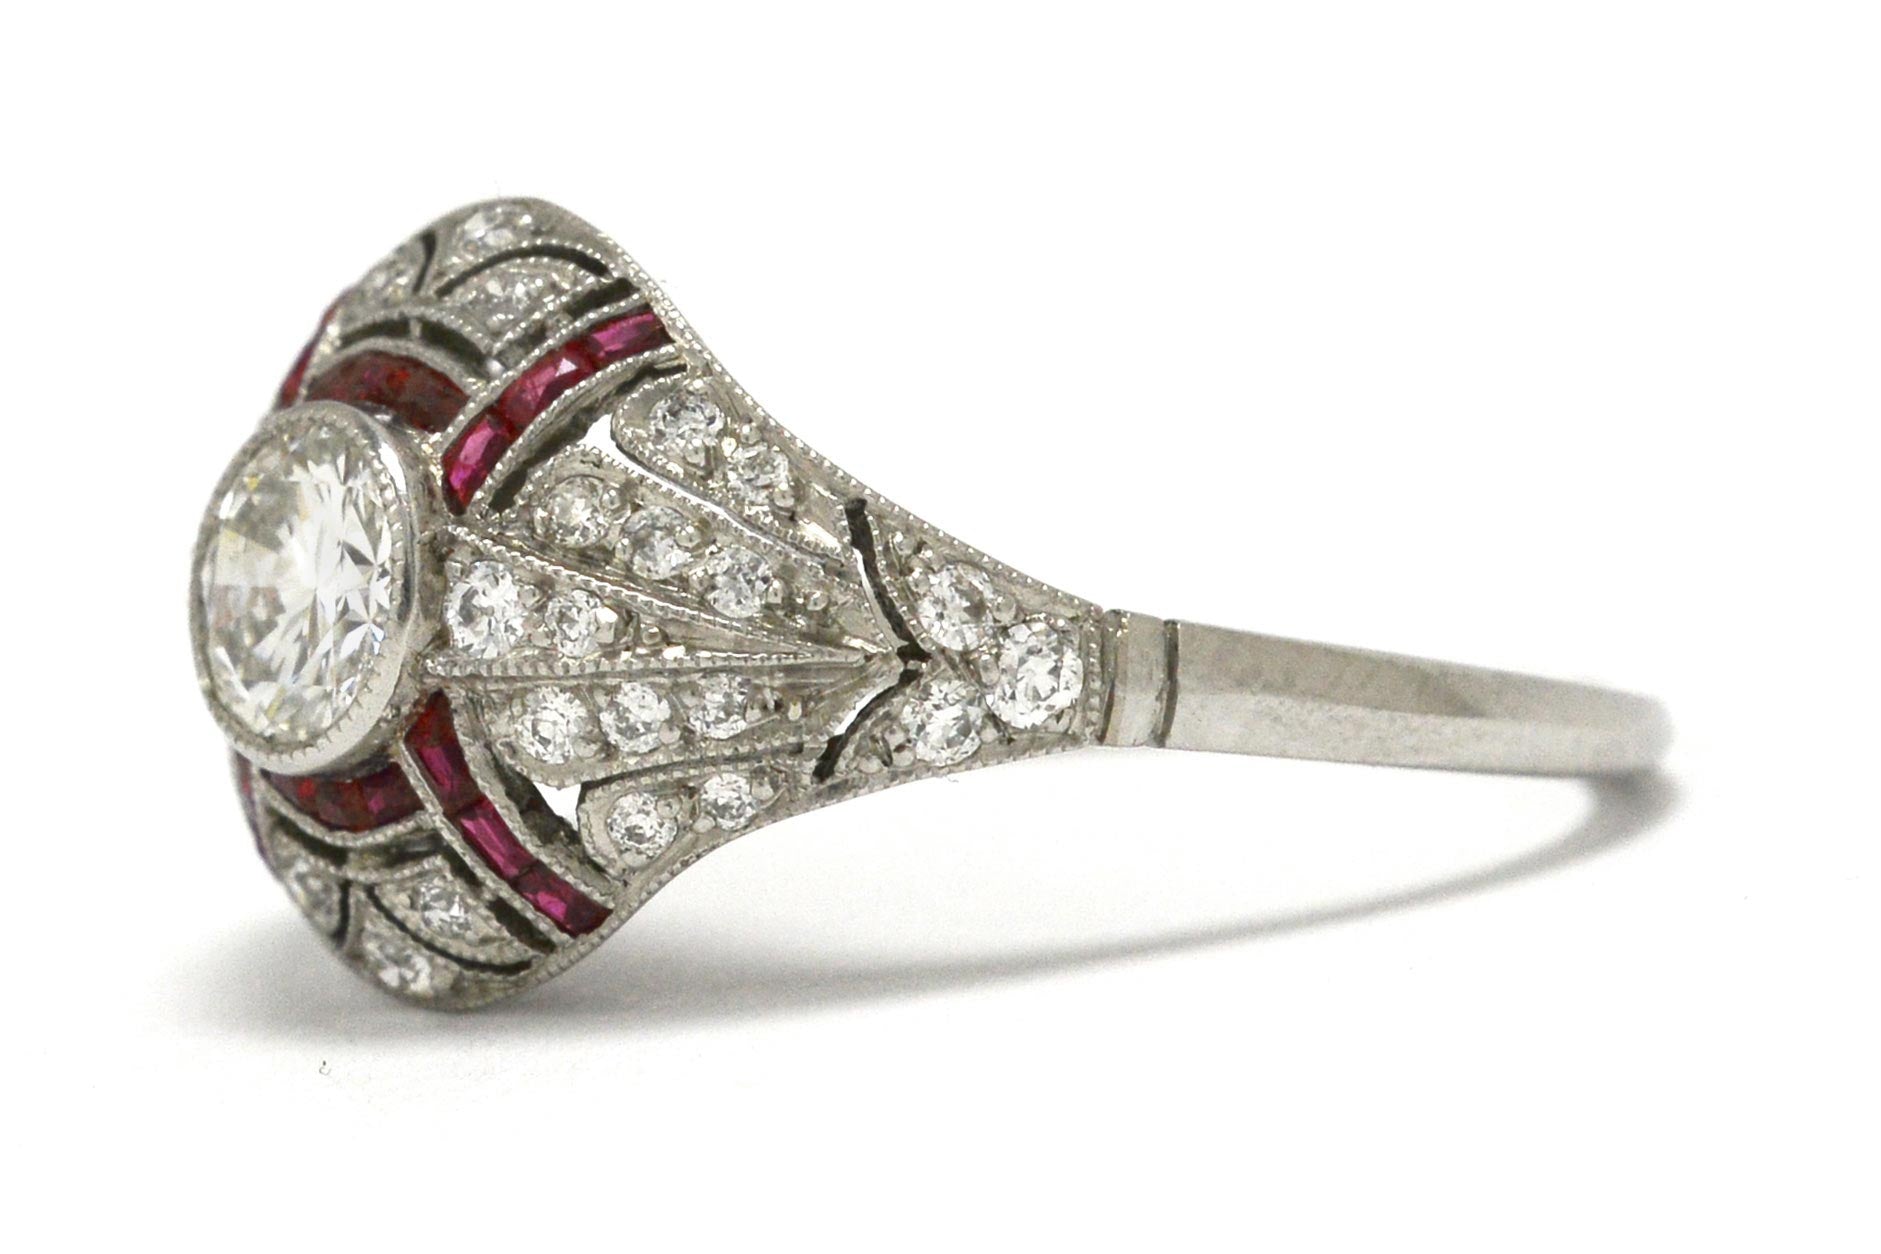 A bezel set round brilliant diamond wedding ring with ruby stripes.